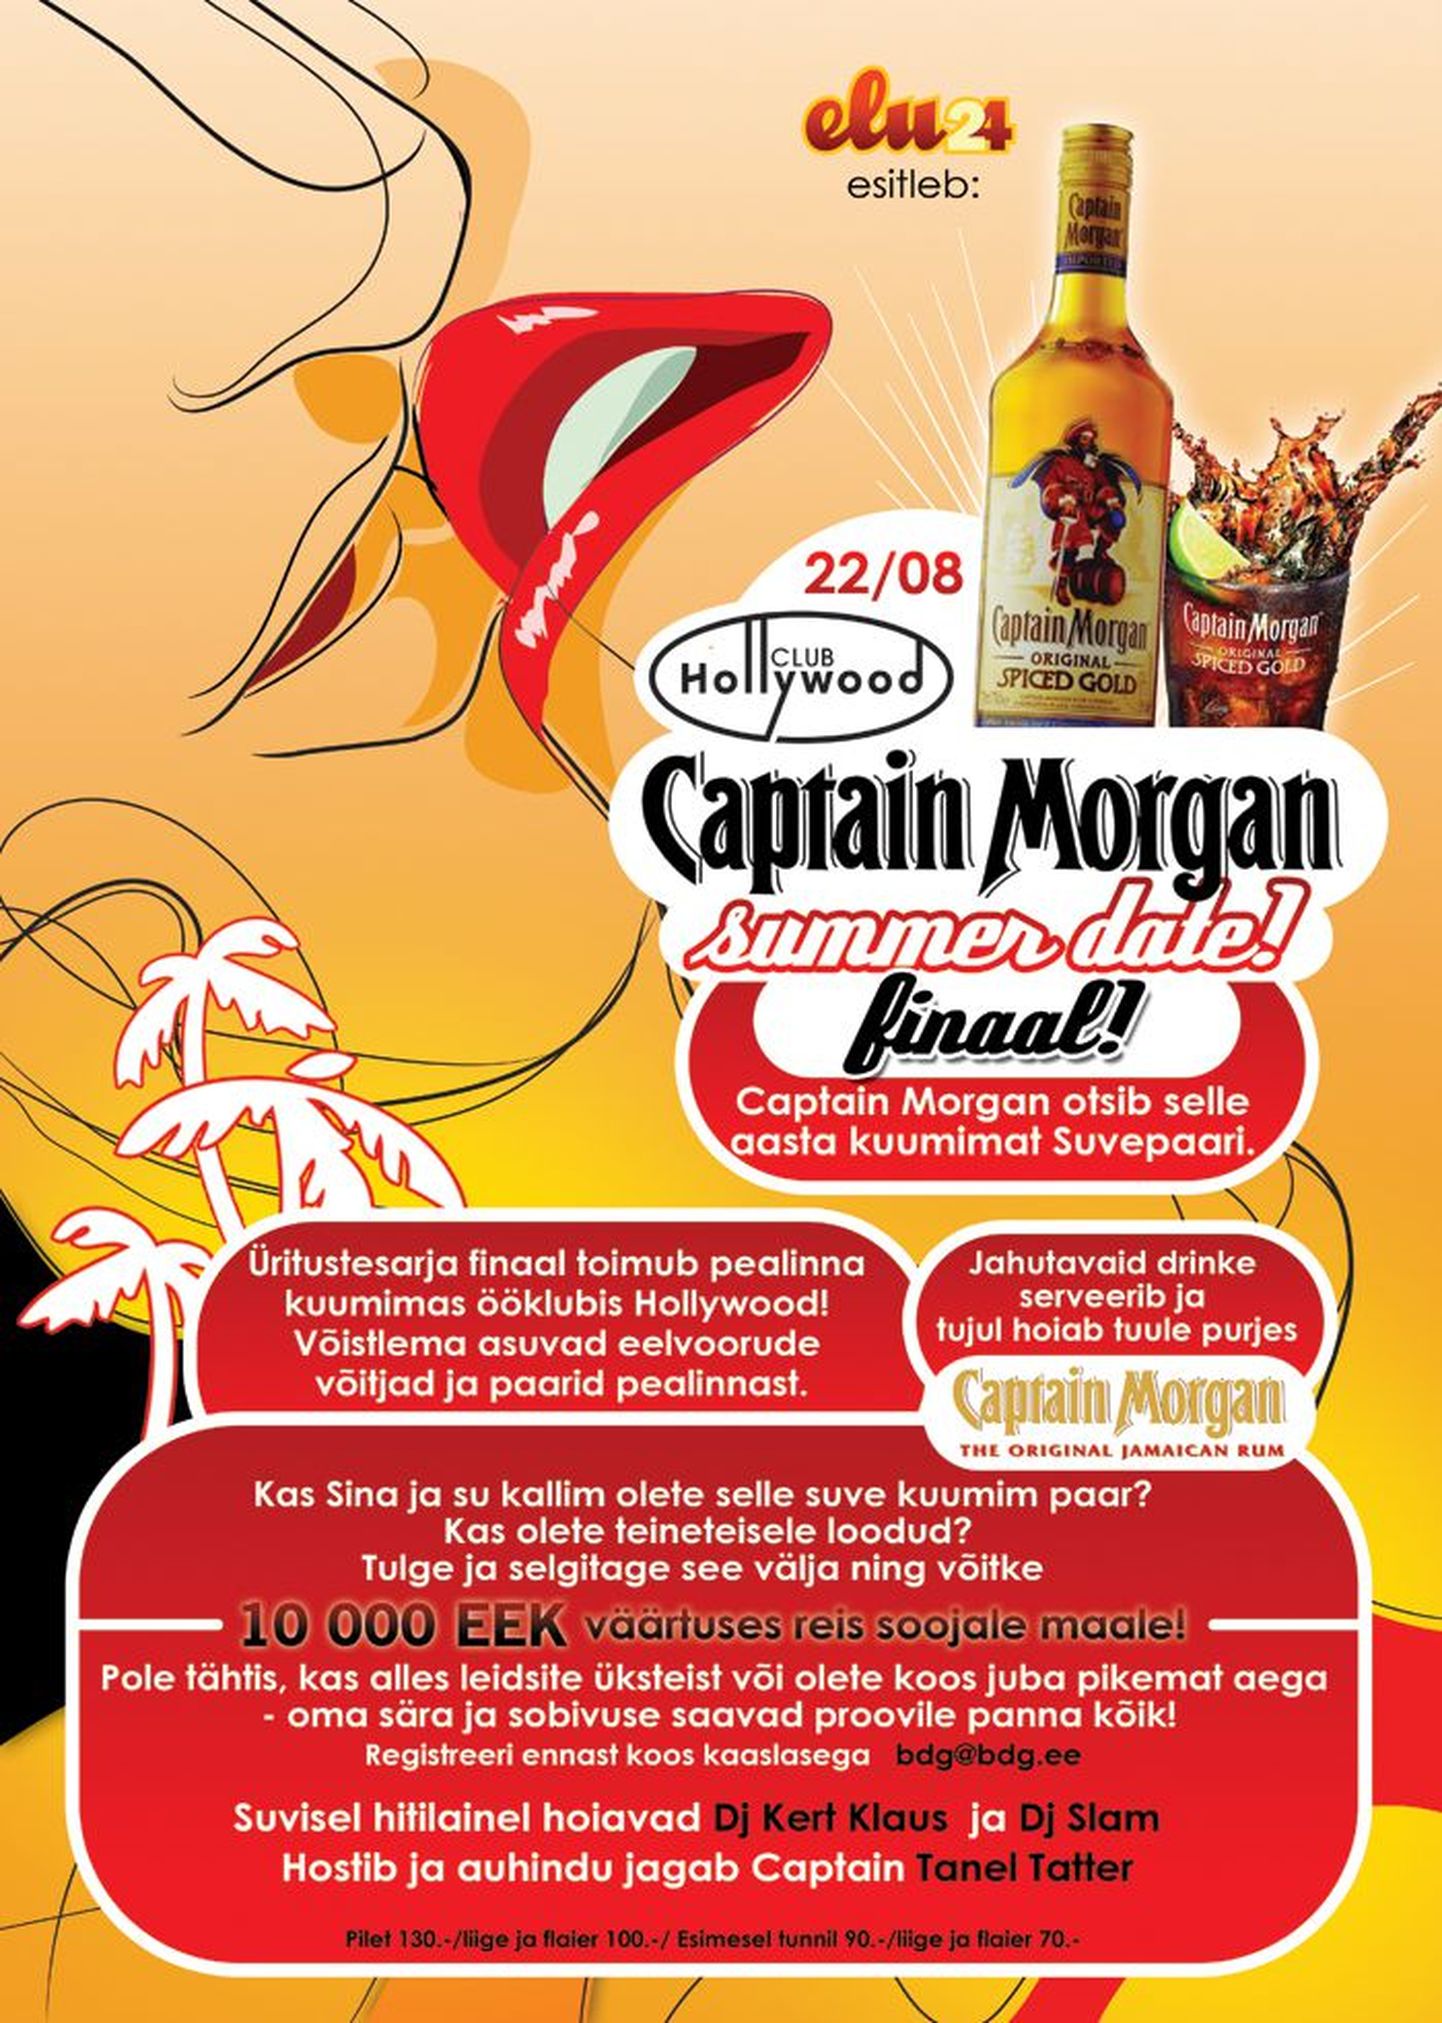 Captain Morgan Summer Date